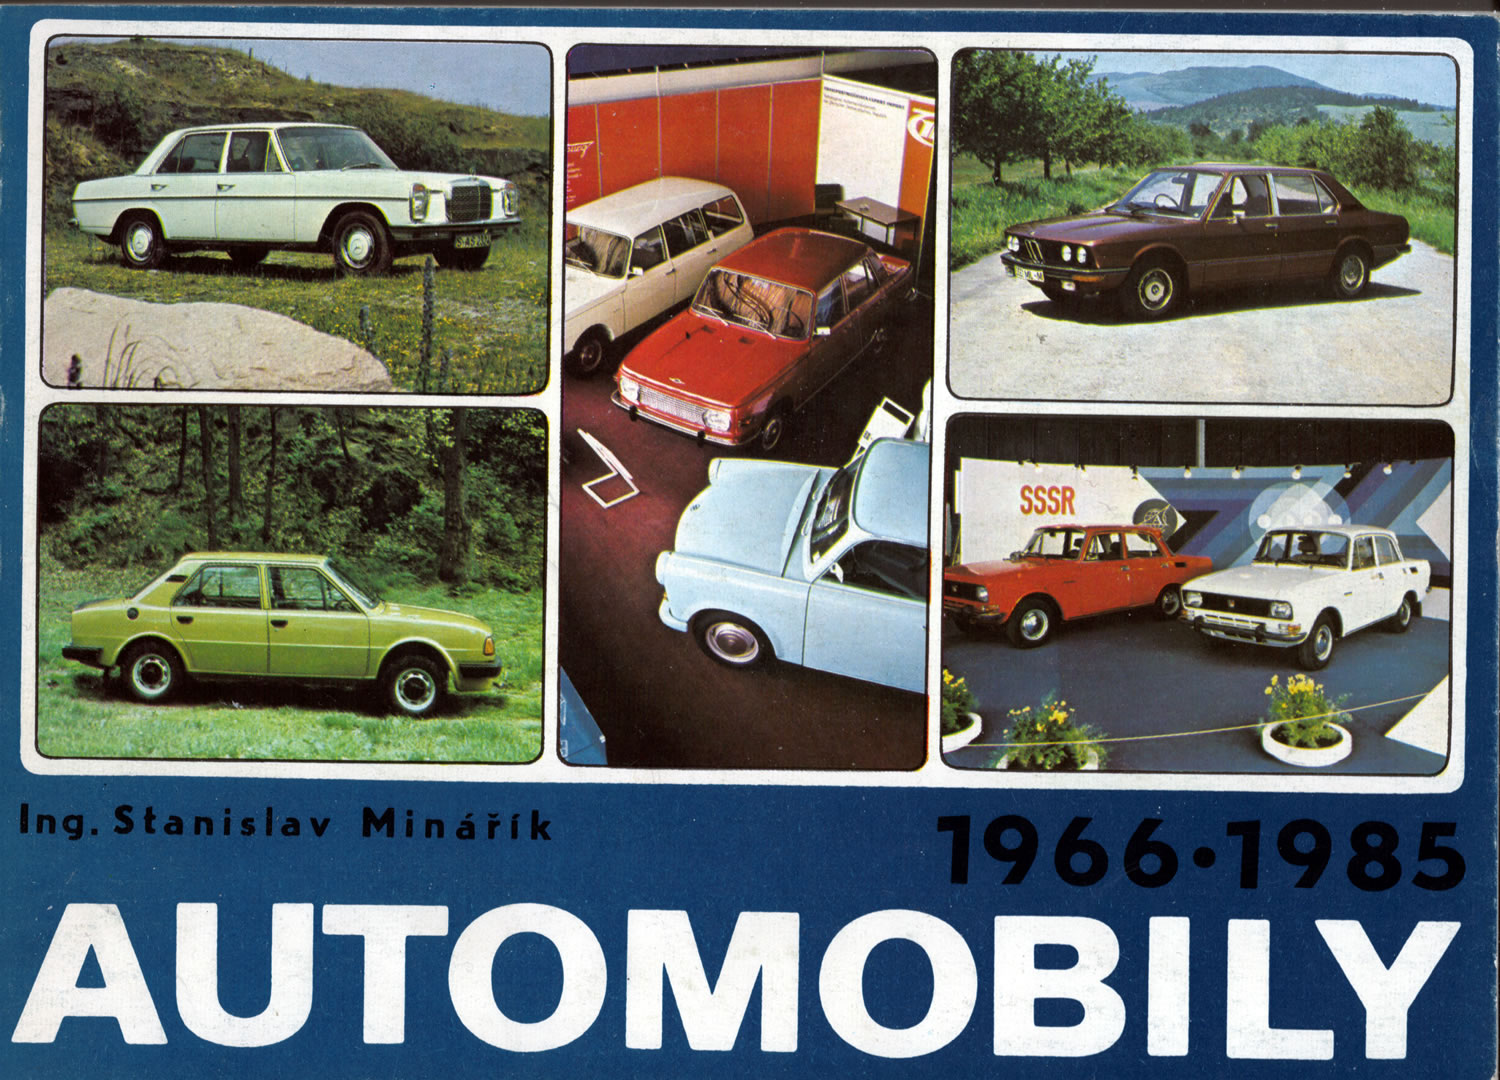 046 Automobily 1966 1985